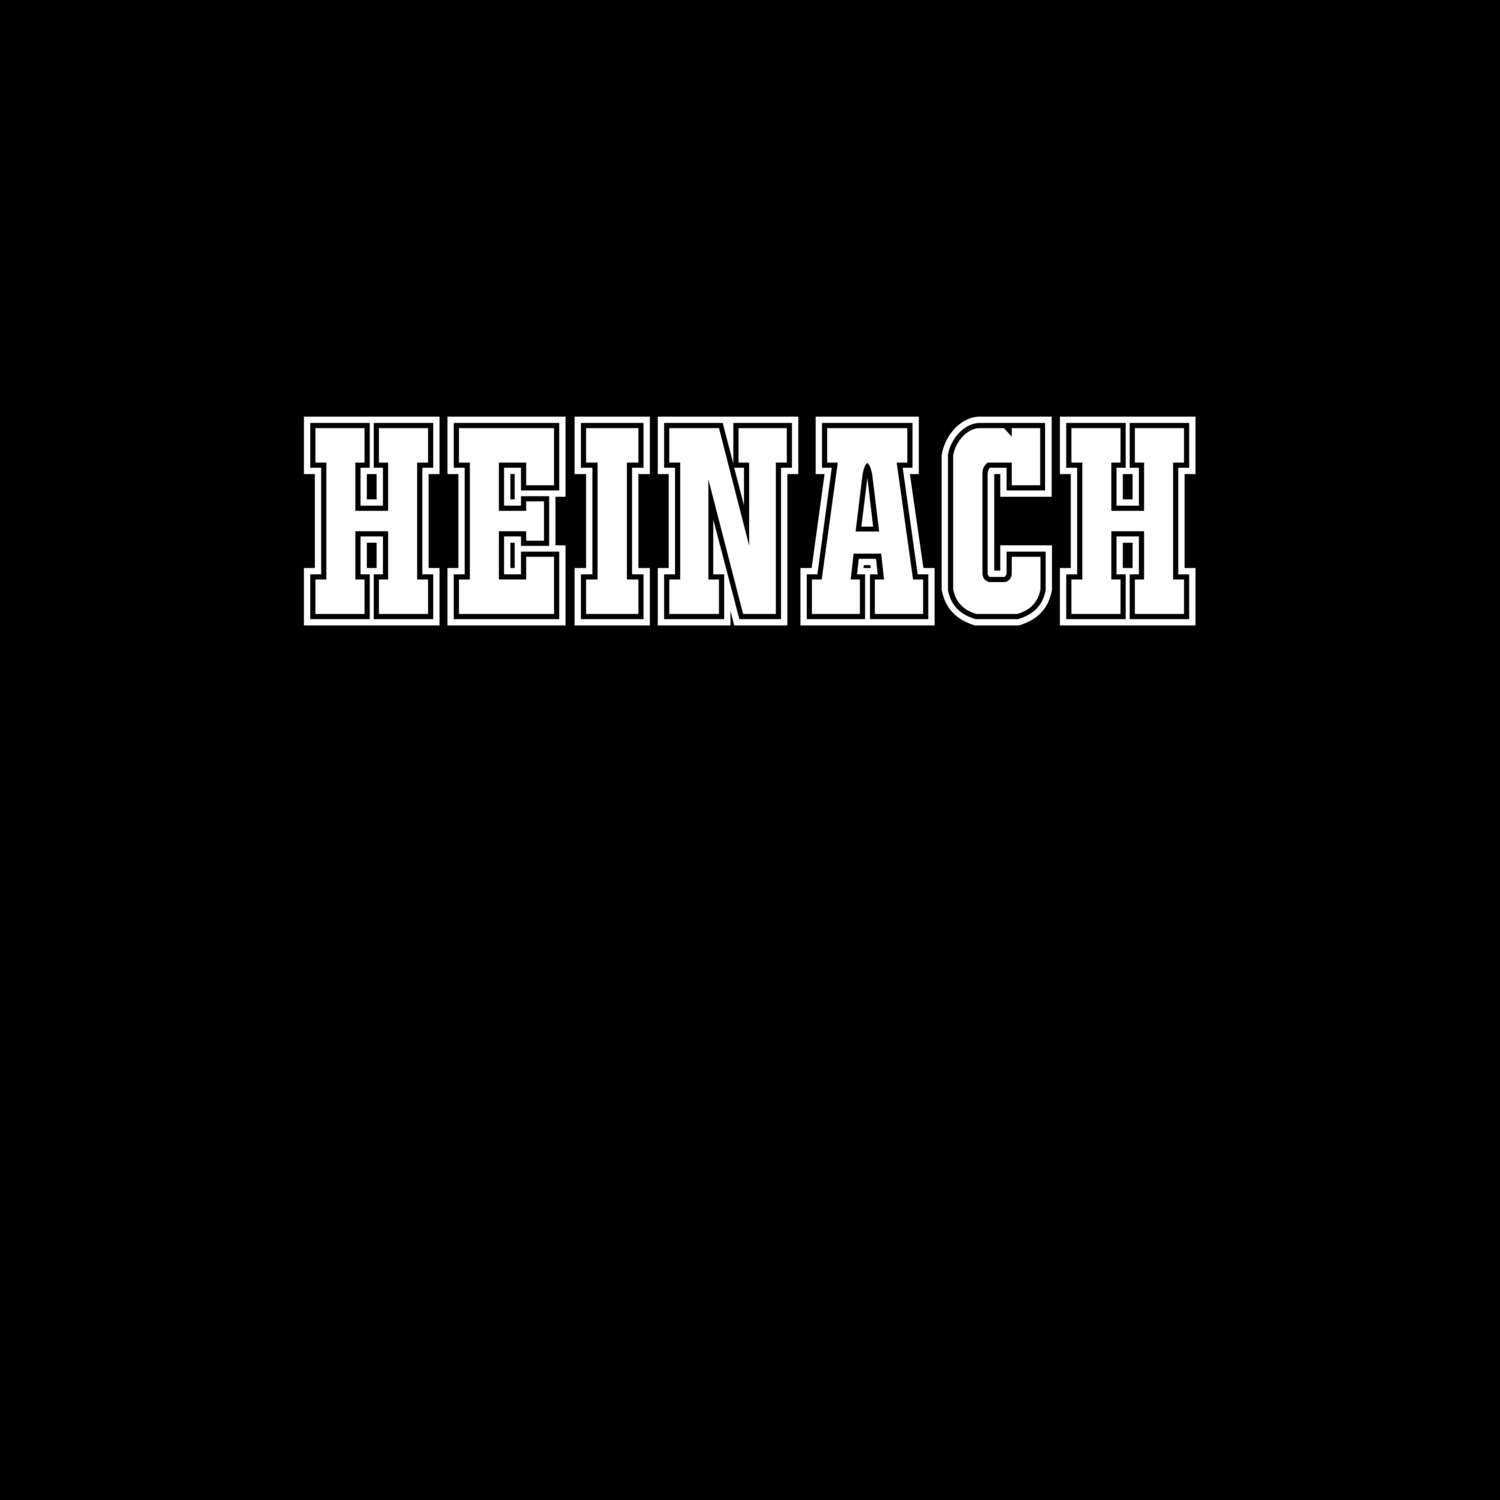 Heinach T-Shirt »Classic«